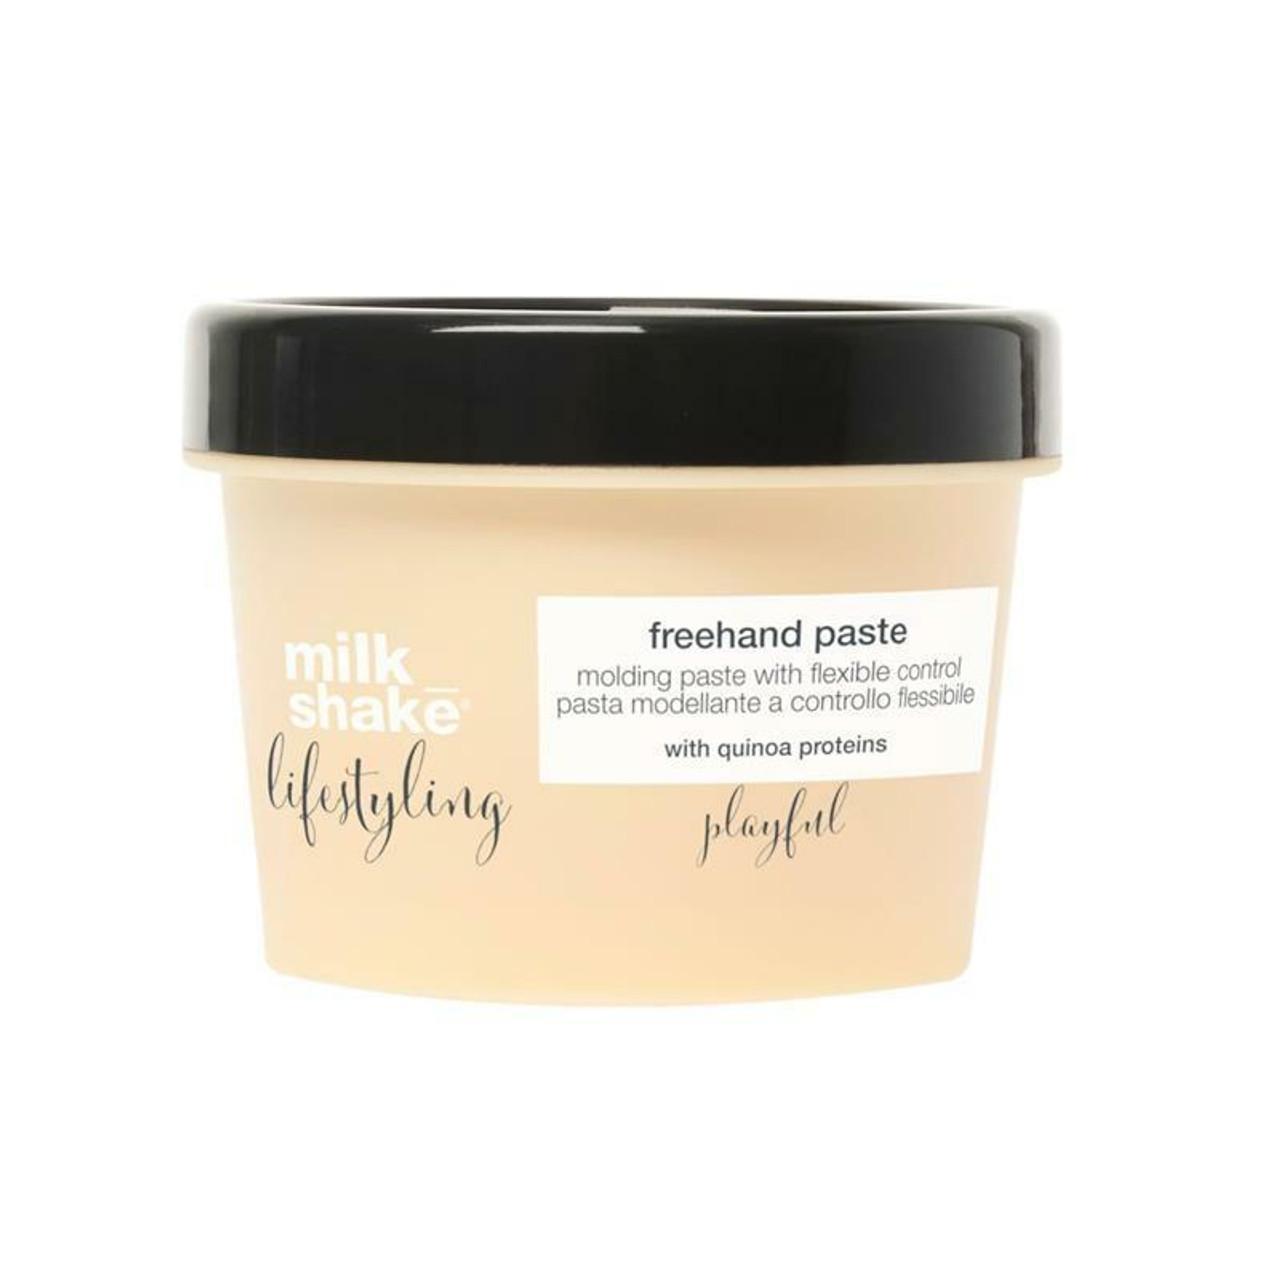 Milk Shake Lifestyling Freehand Paste Моделираща паста за еластична текстура на косата